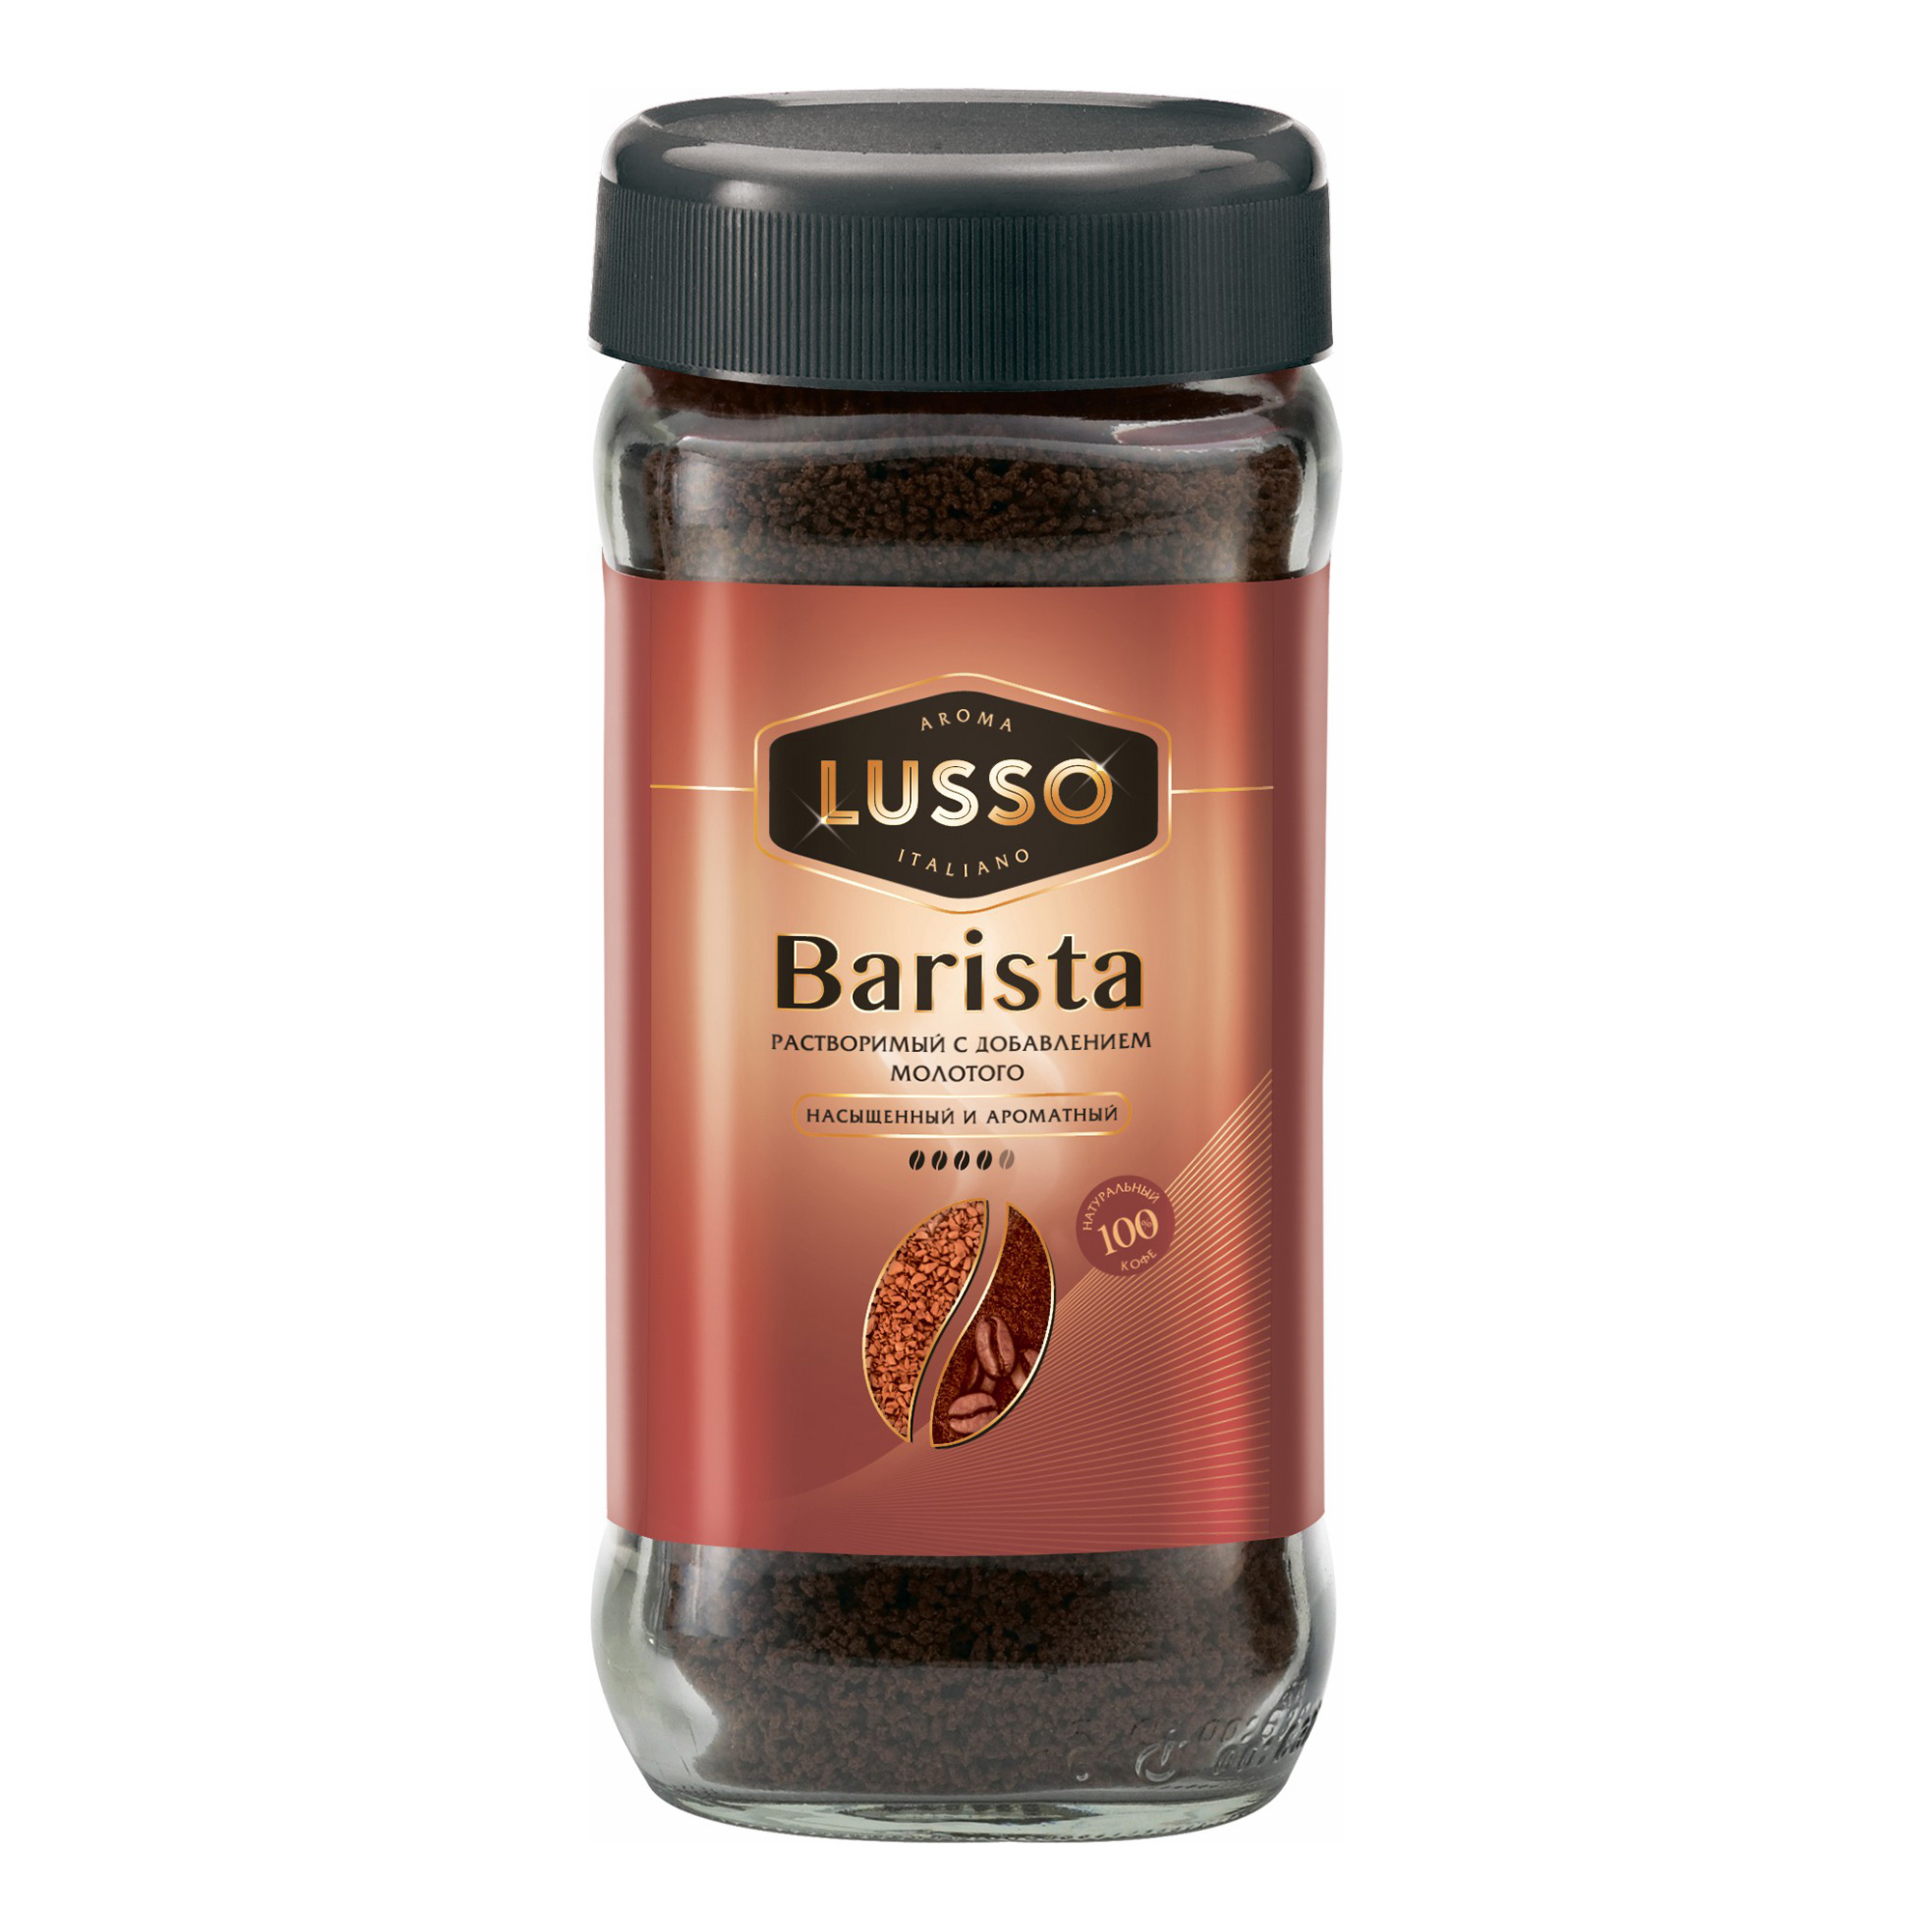 Бариста растворимый. Lusso Barista растворимый. Кофе растворимый lusso 95г стекл. Банка. «Lusso», кофе Gold, растворимый, 2 г. Кофе растворимый lusso 75г.